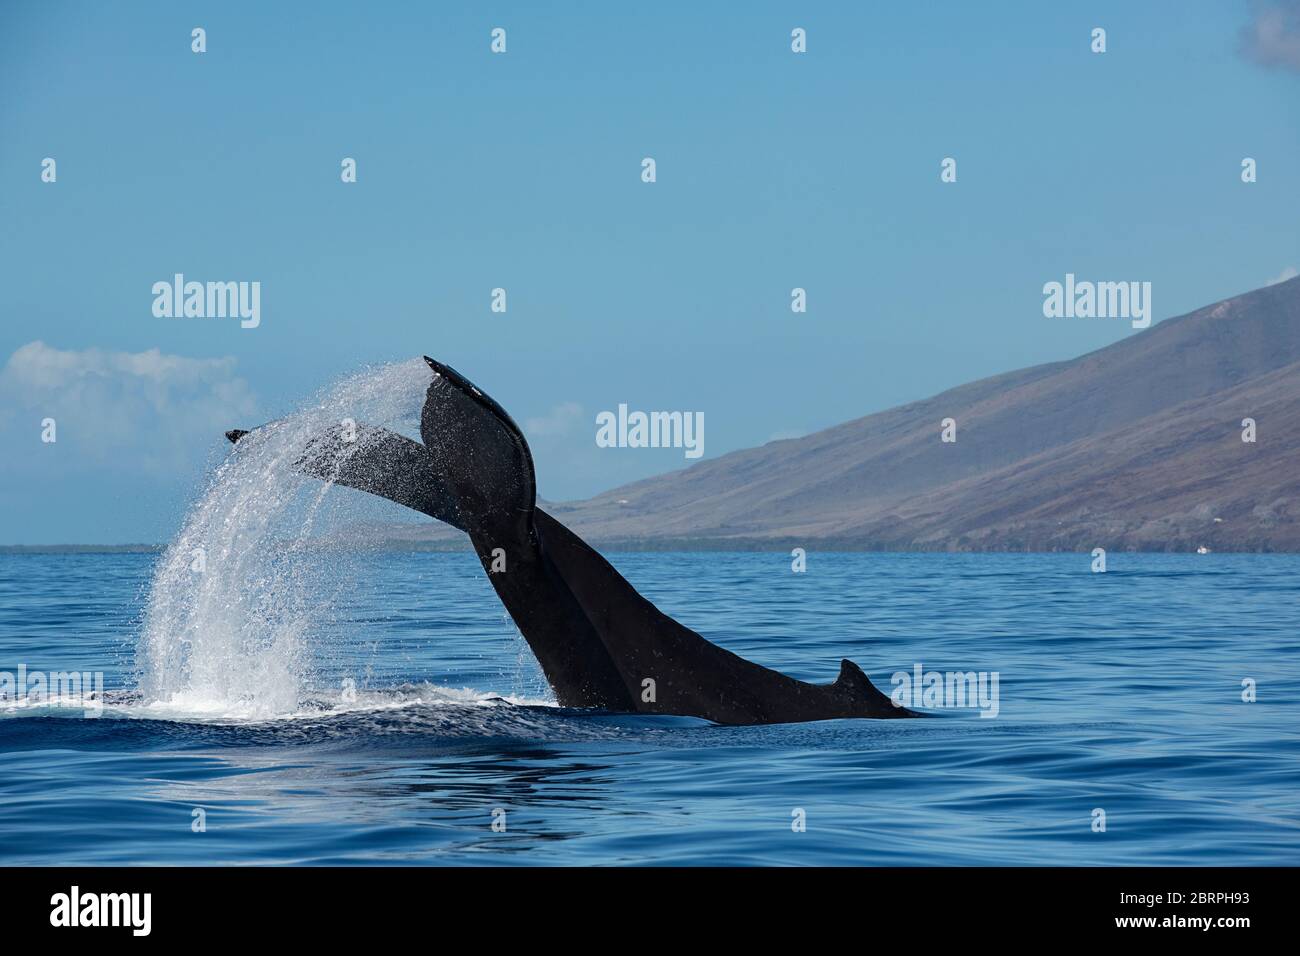 humpback whale, Megaptera novaeangliae, fluke slapping or lobtailing, West Maui, Hawaii, Hawaii Humpback Whale National Marine Sanctuary, USA Stock Photo